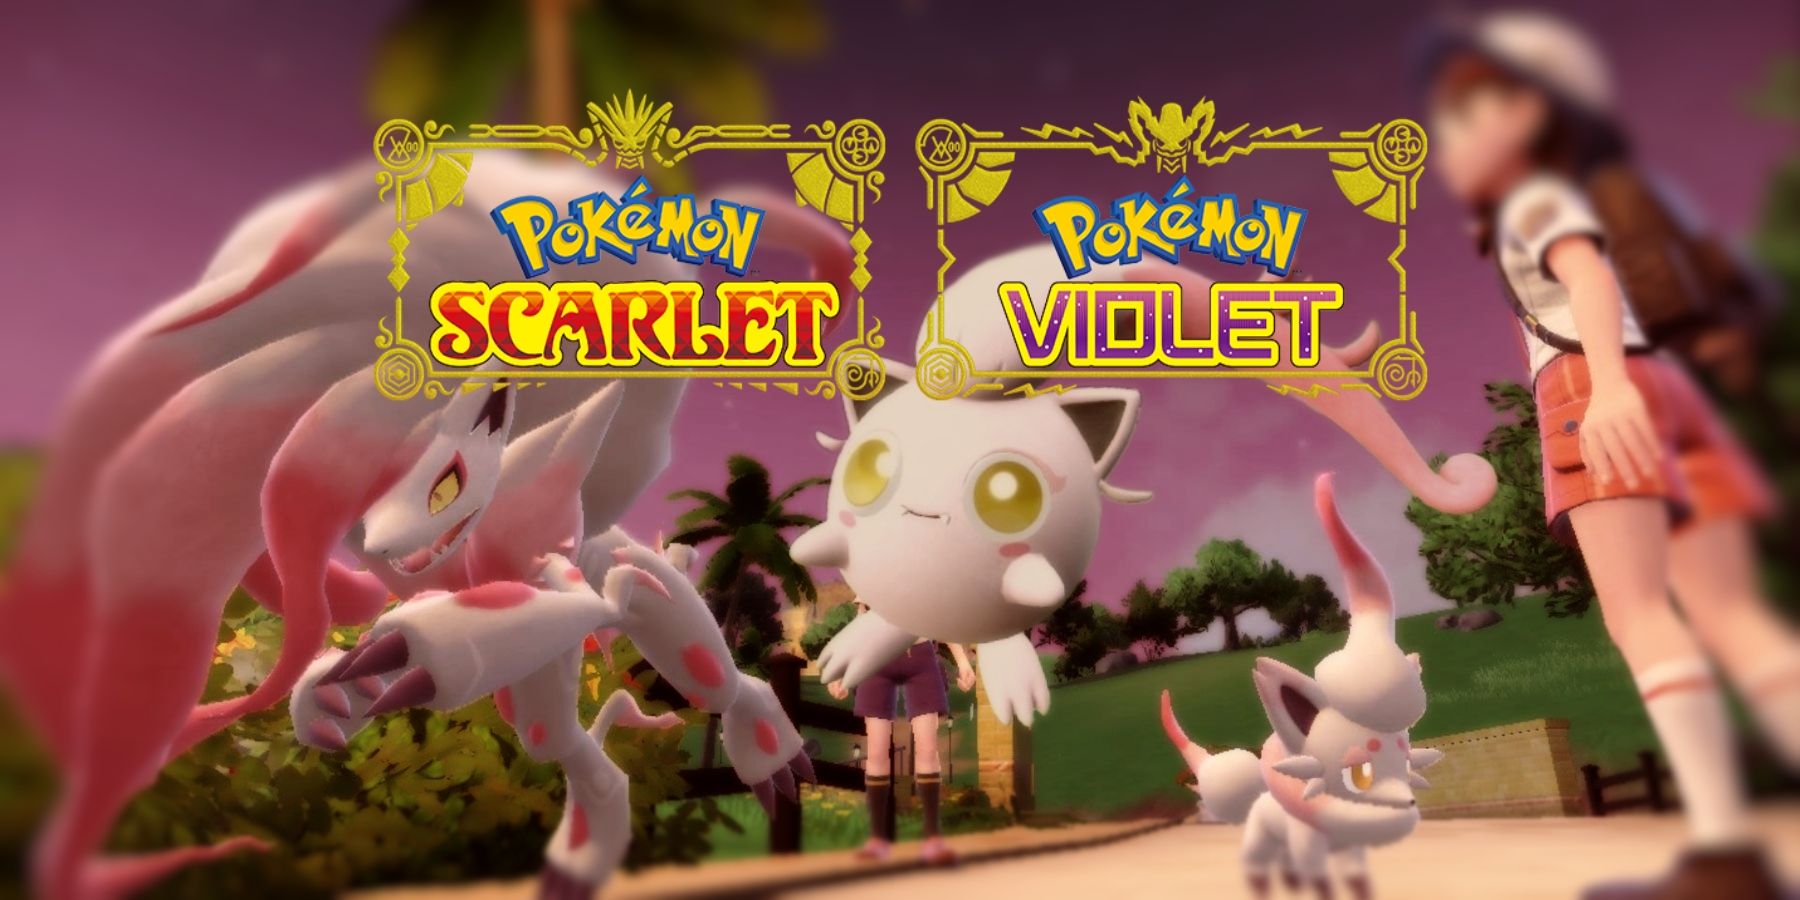 Pokémon Scarlet And Violet Linking With Pokémon GO In 2023